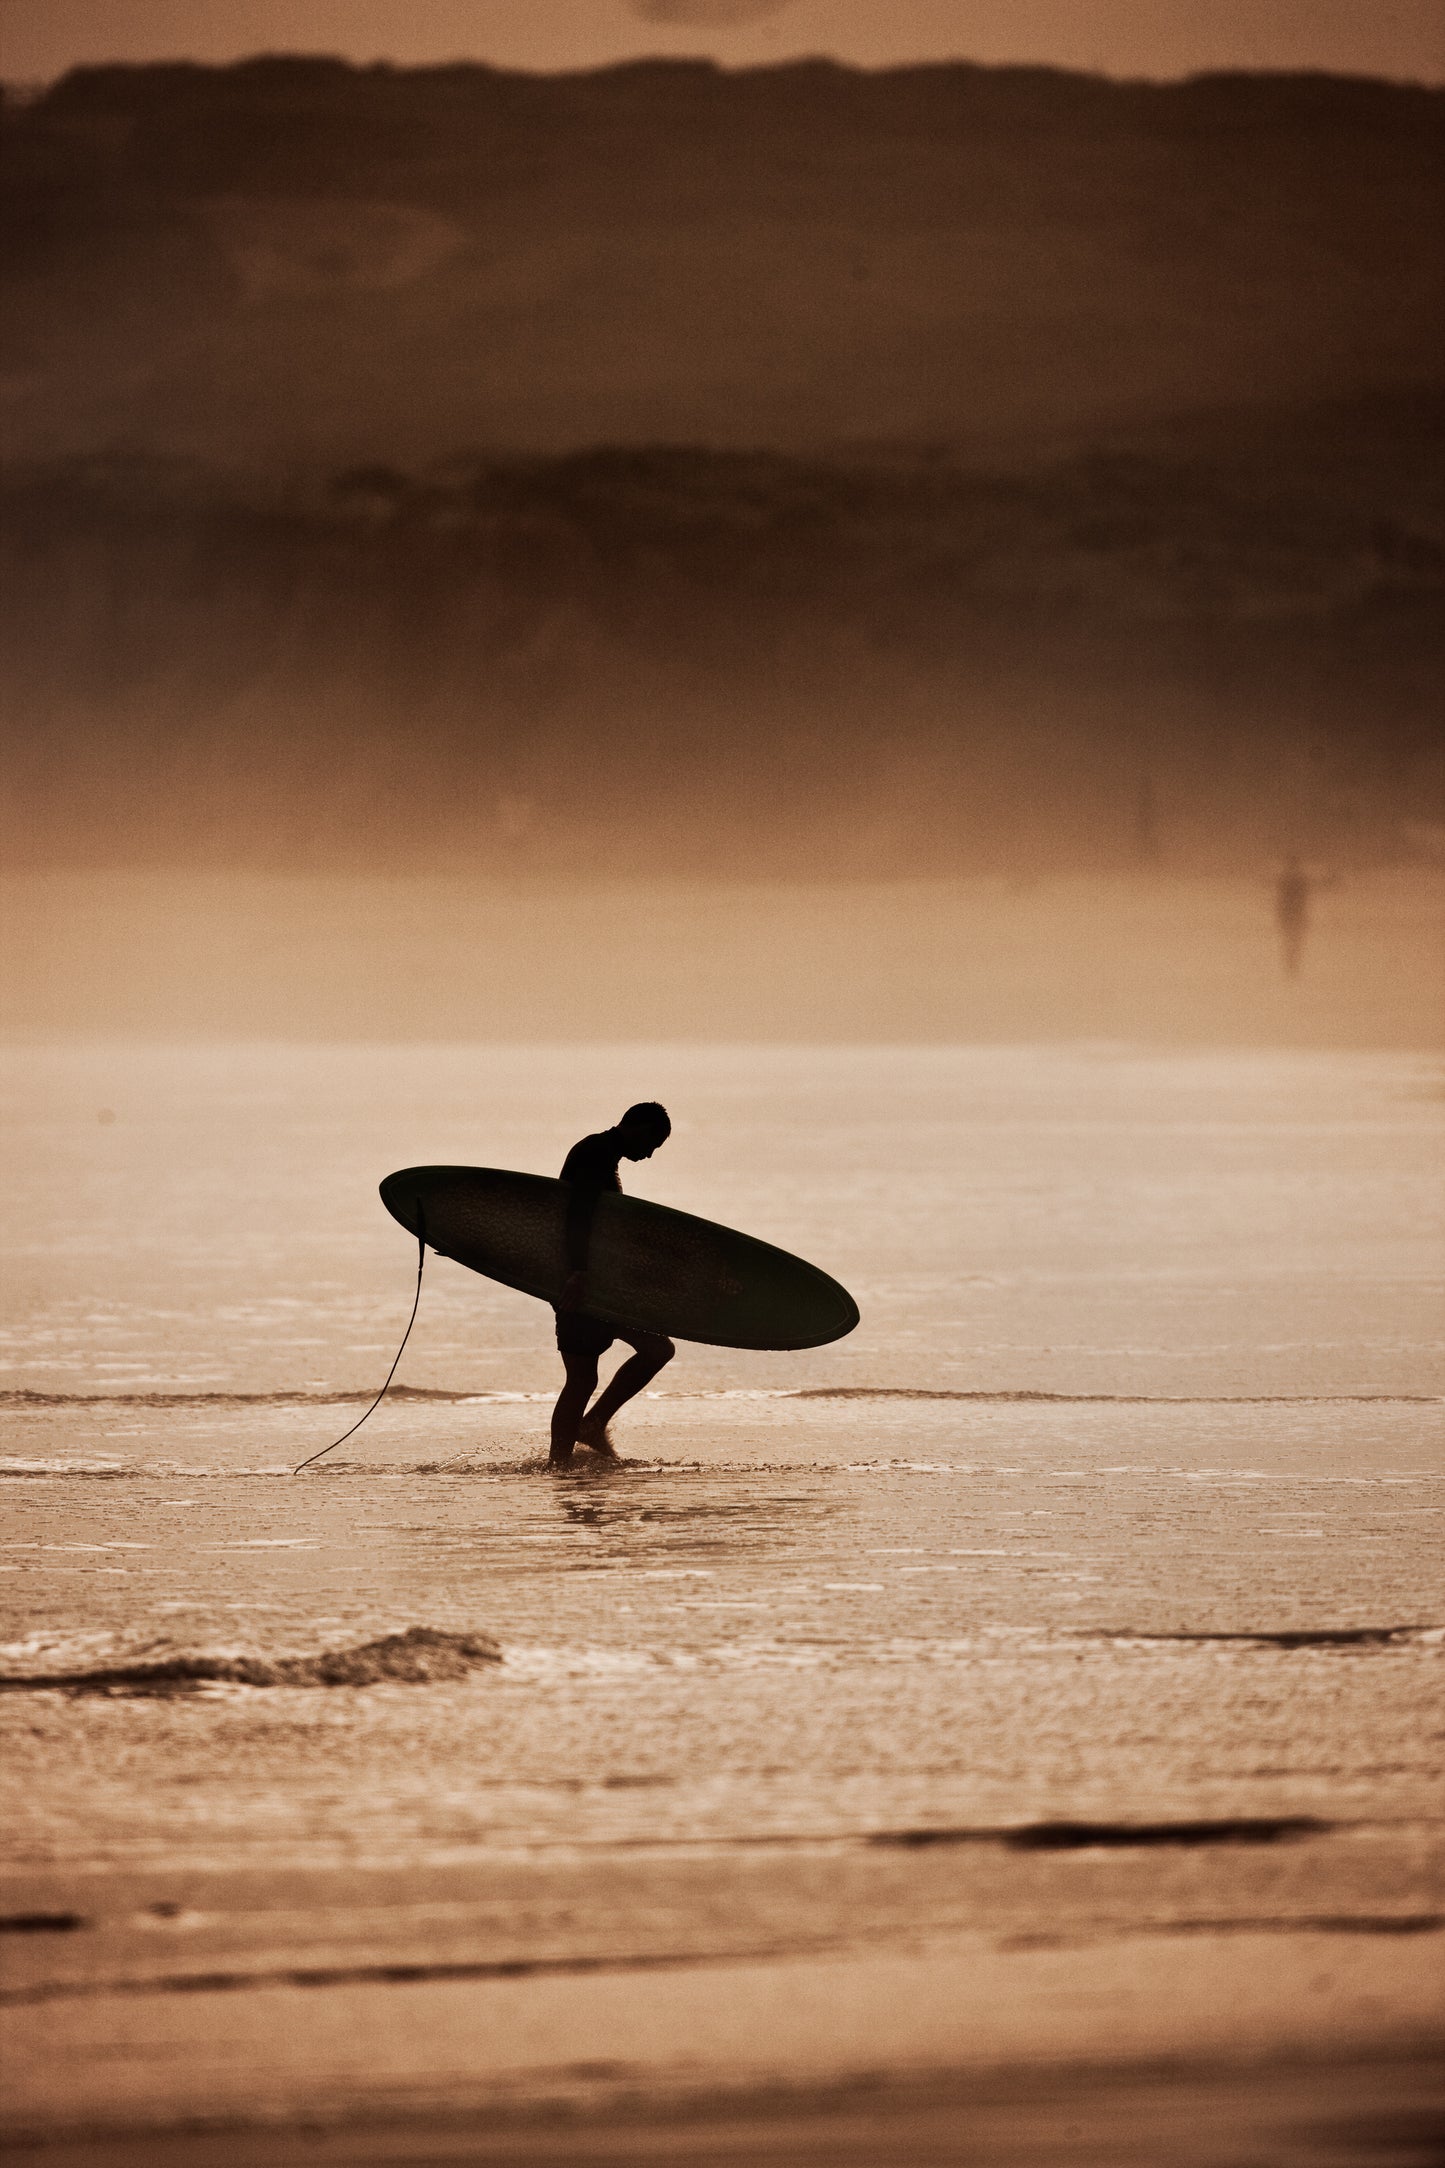 Surfer Walking with Board